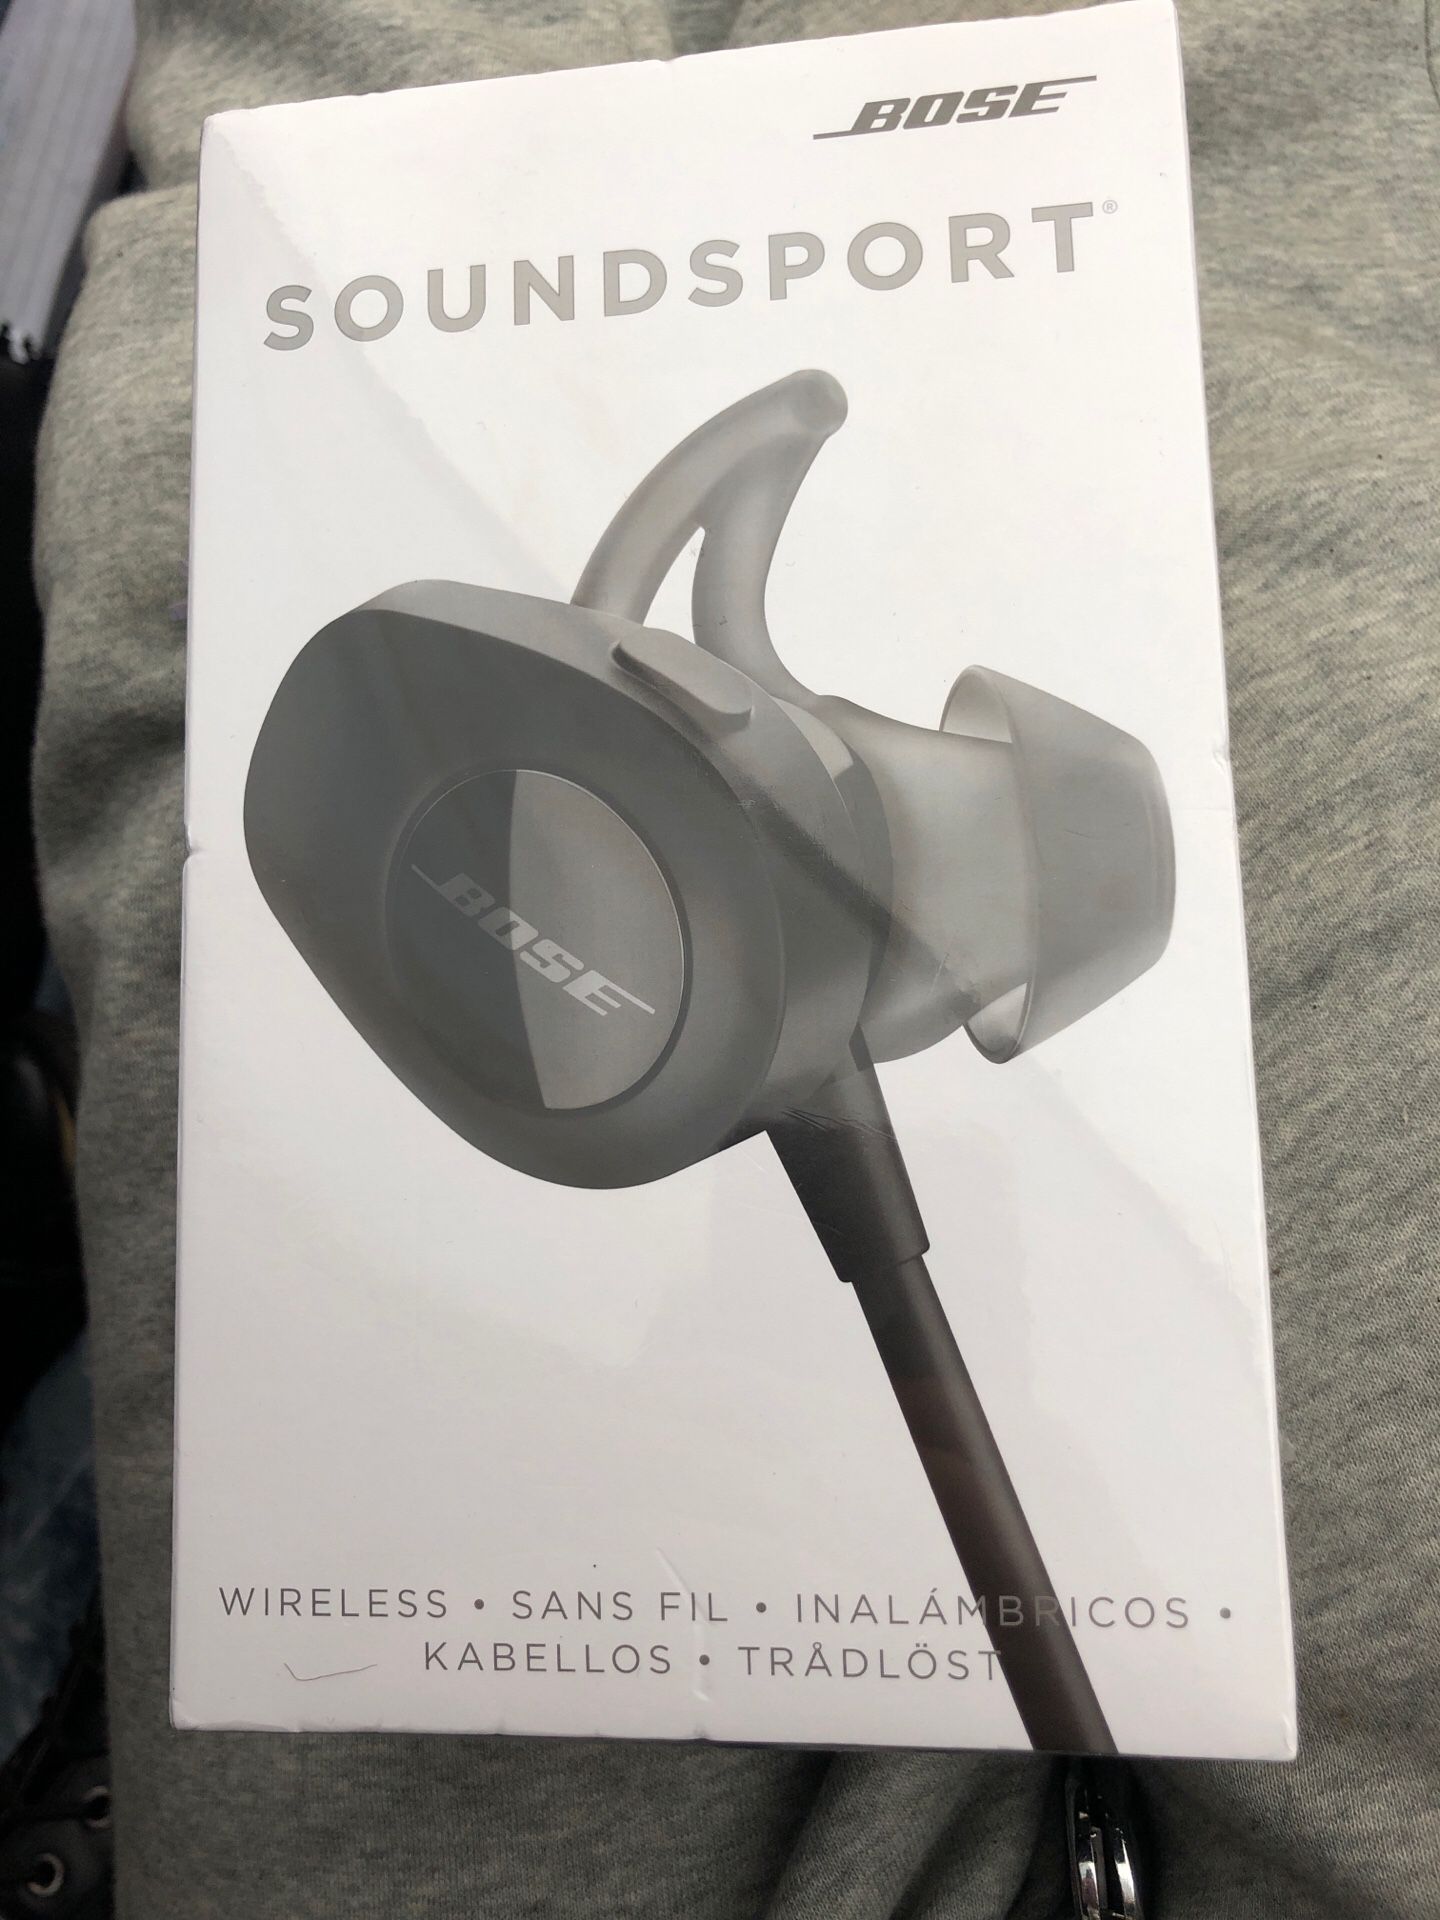 Brand new BOSE SOUNDSPORT earbuds headphones WIRELESS SEALED IN BOX